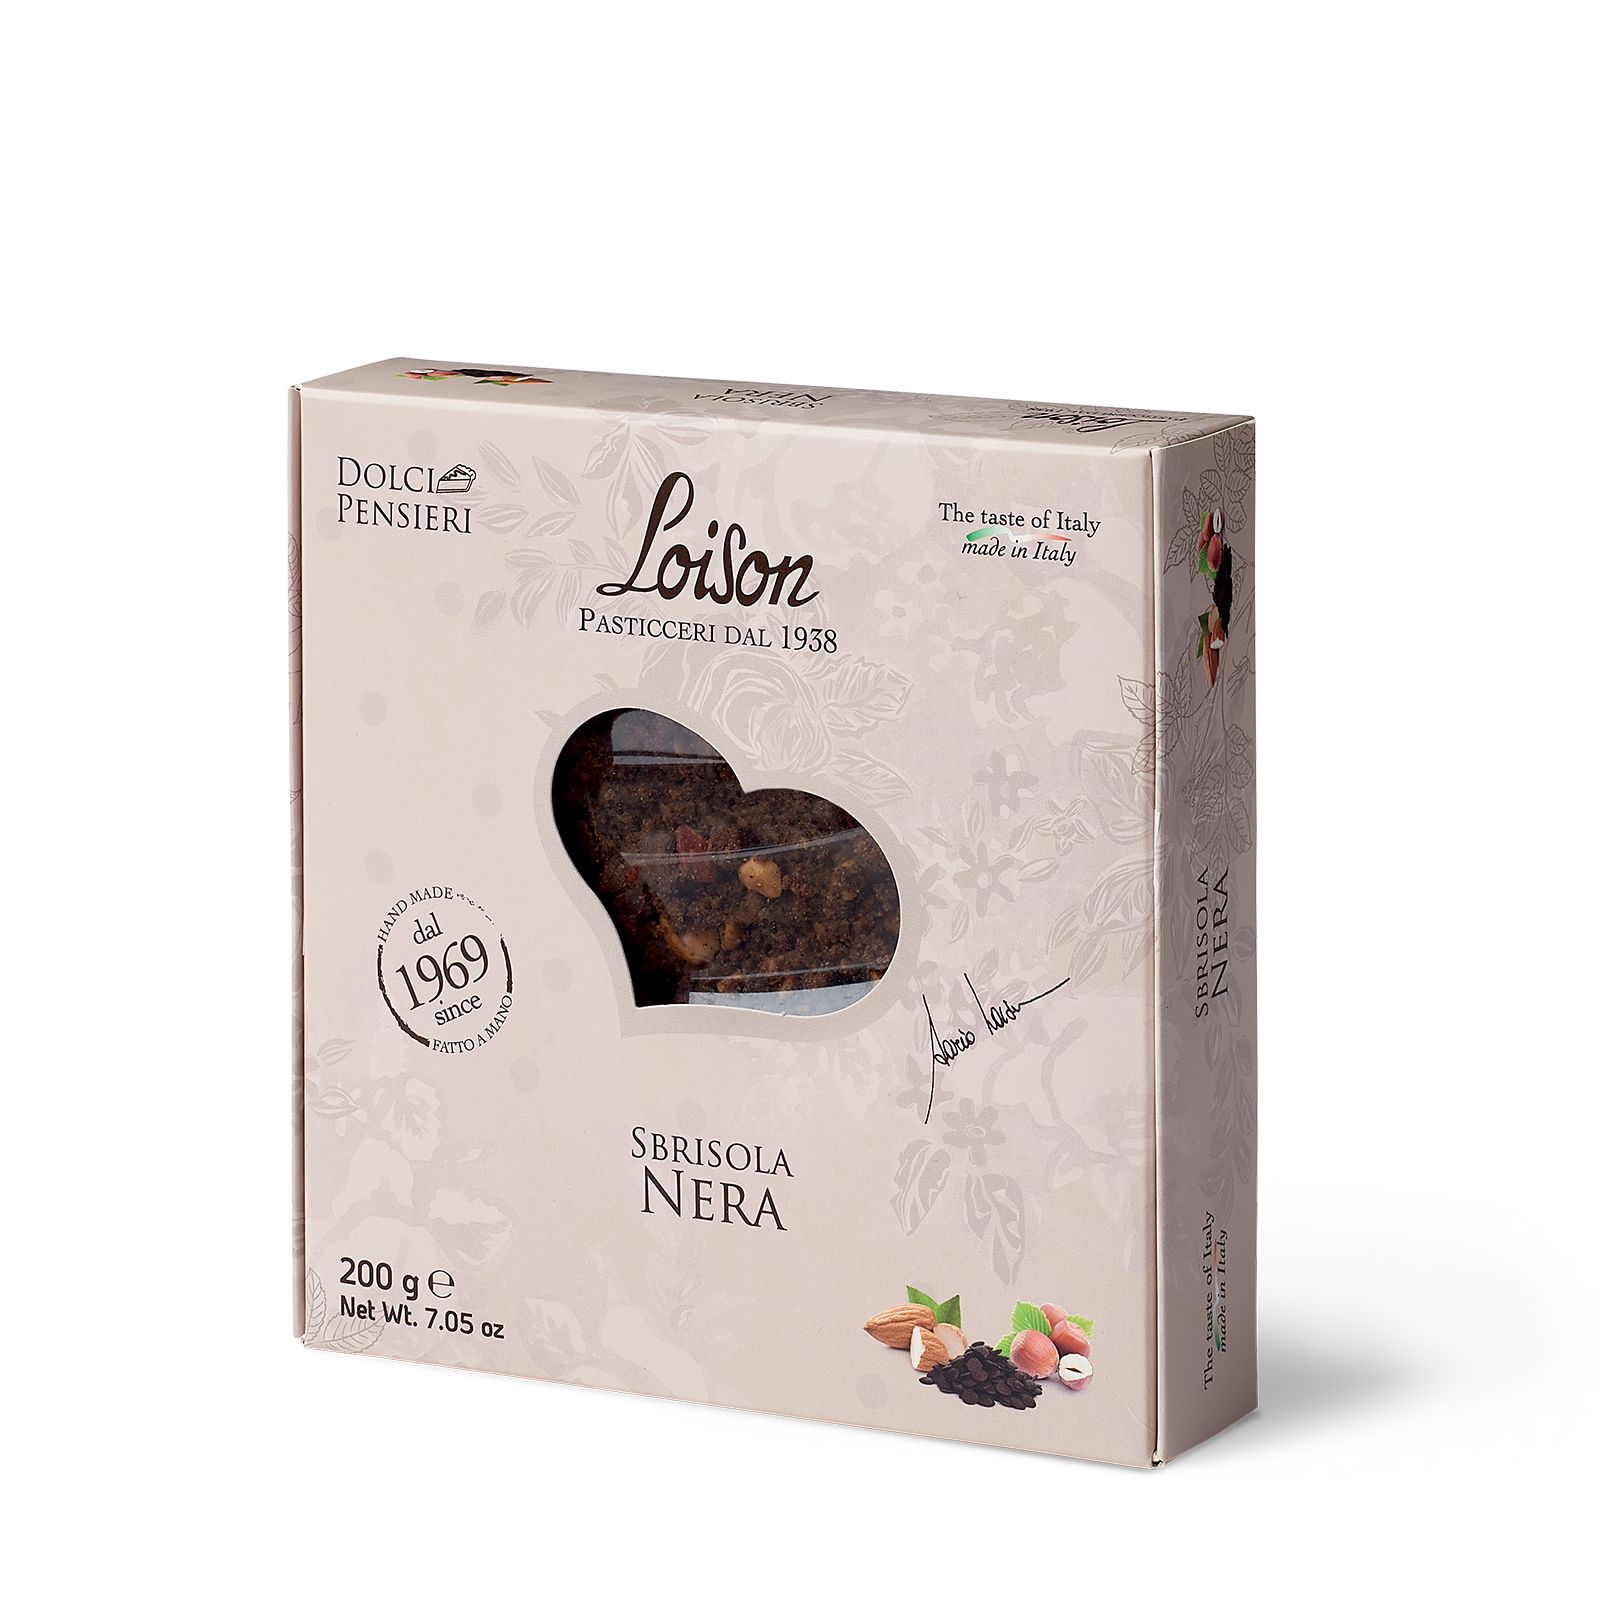 Sbrisola cake with cocoa-hazelnut cream and almond Loison